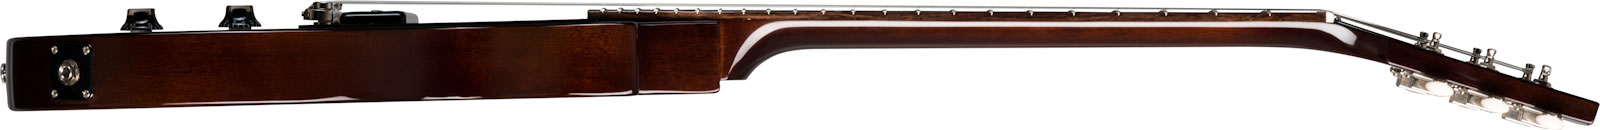 Gibson Les Paul Junior Original P90 Ht Rw - Vintage Tobacco Burst - Single cut electric guitar - Variation 2